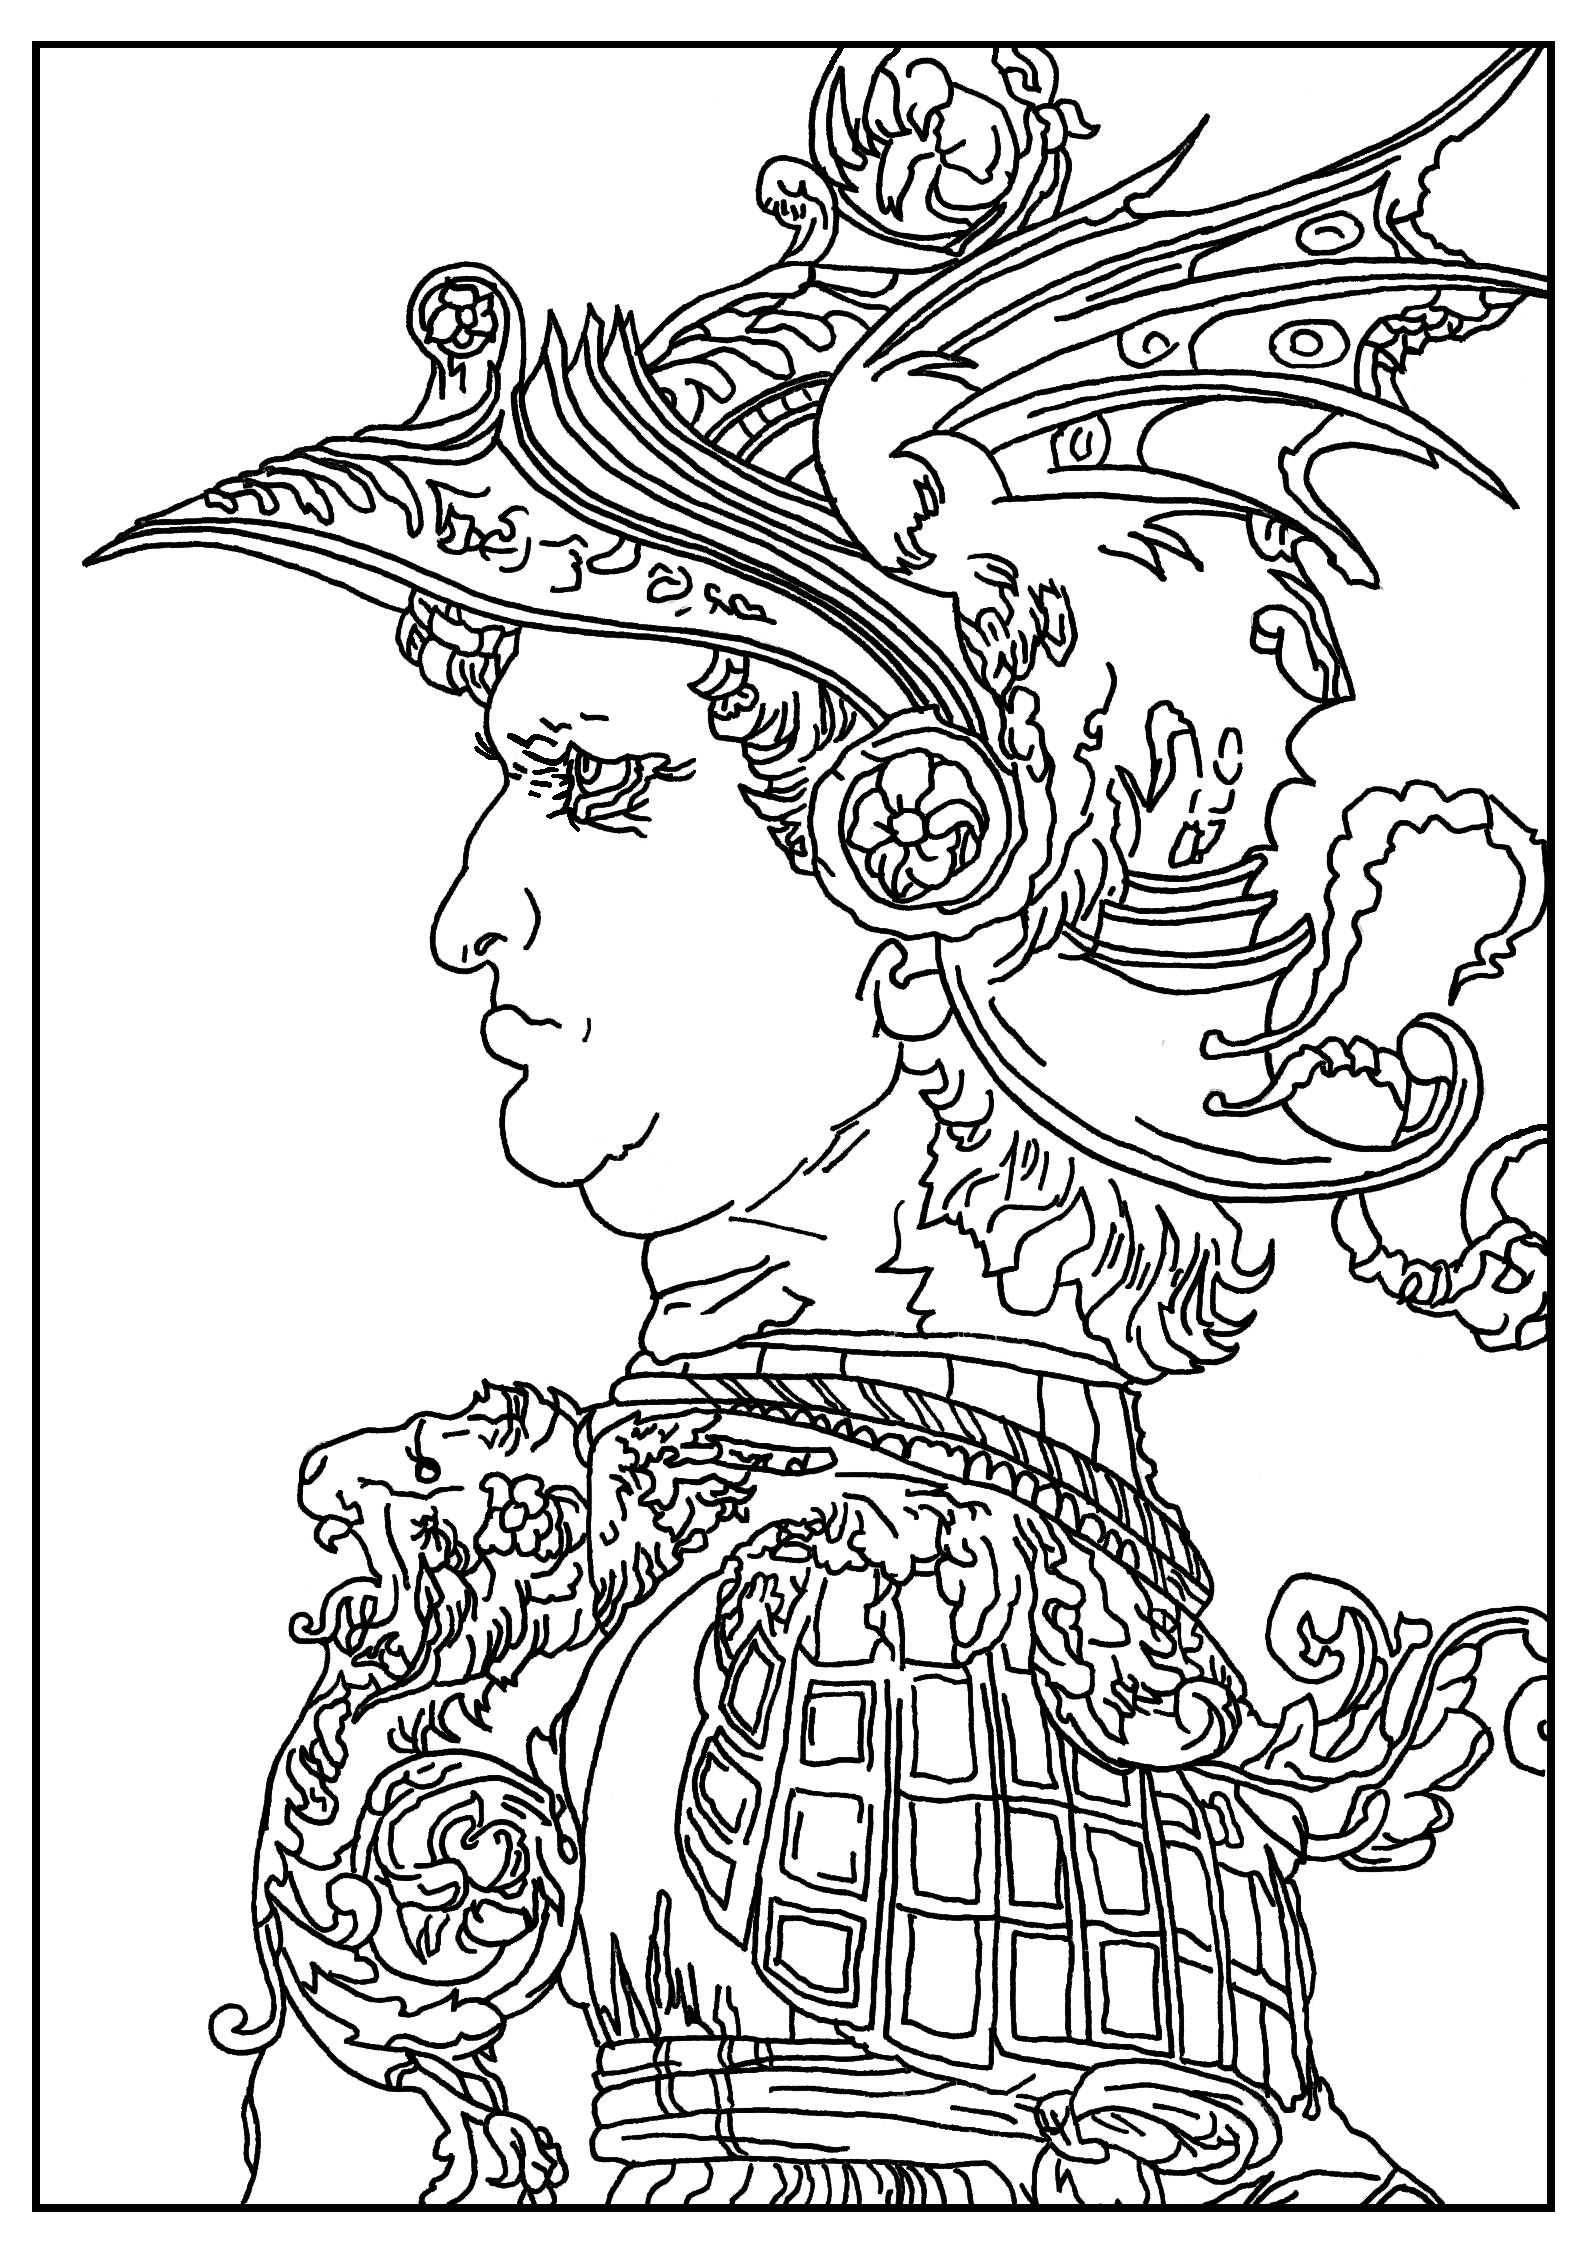 Profile of a warrior in helmet (1477), by Leonardo da Vinci